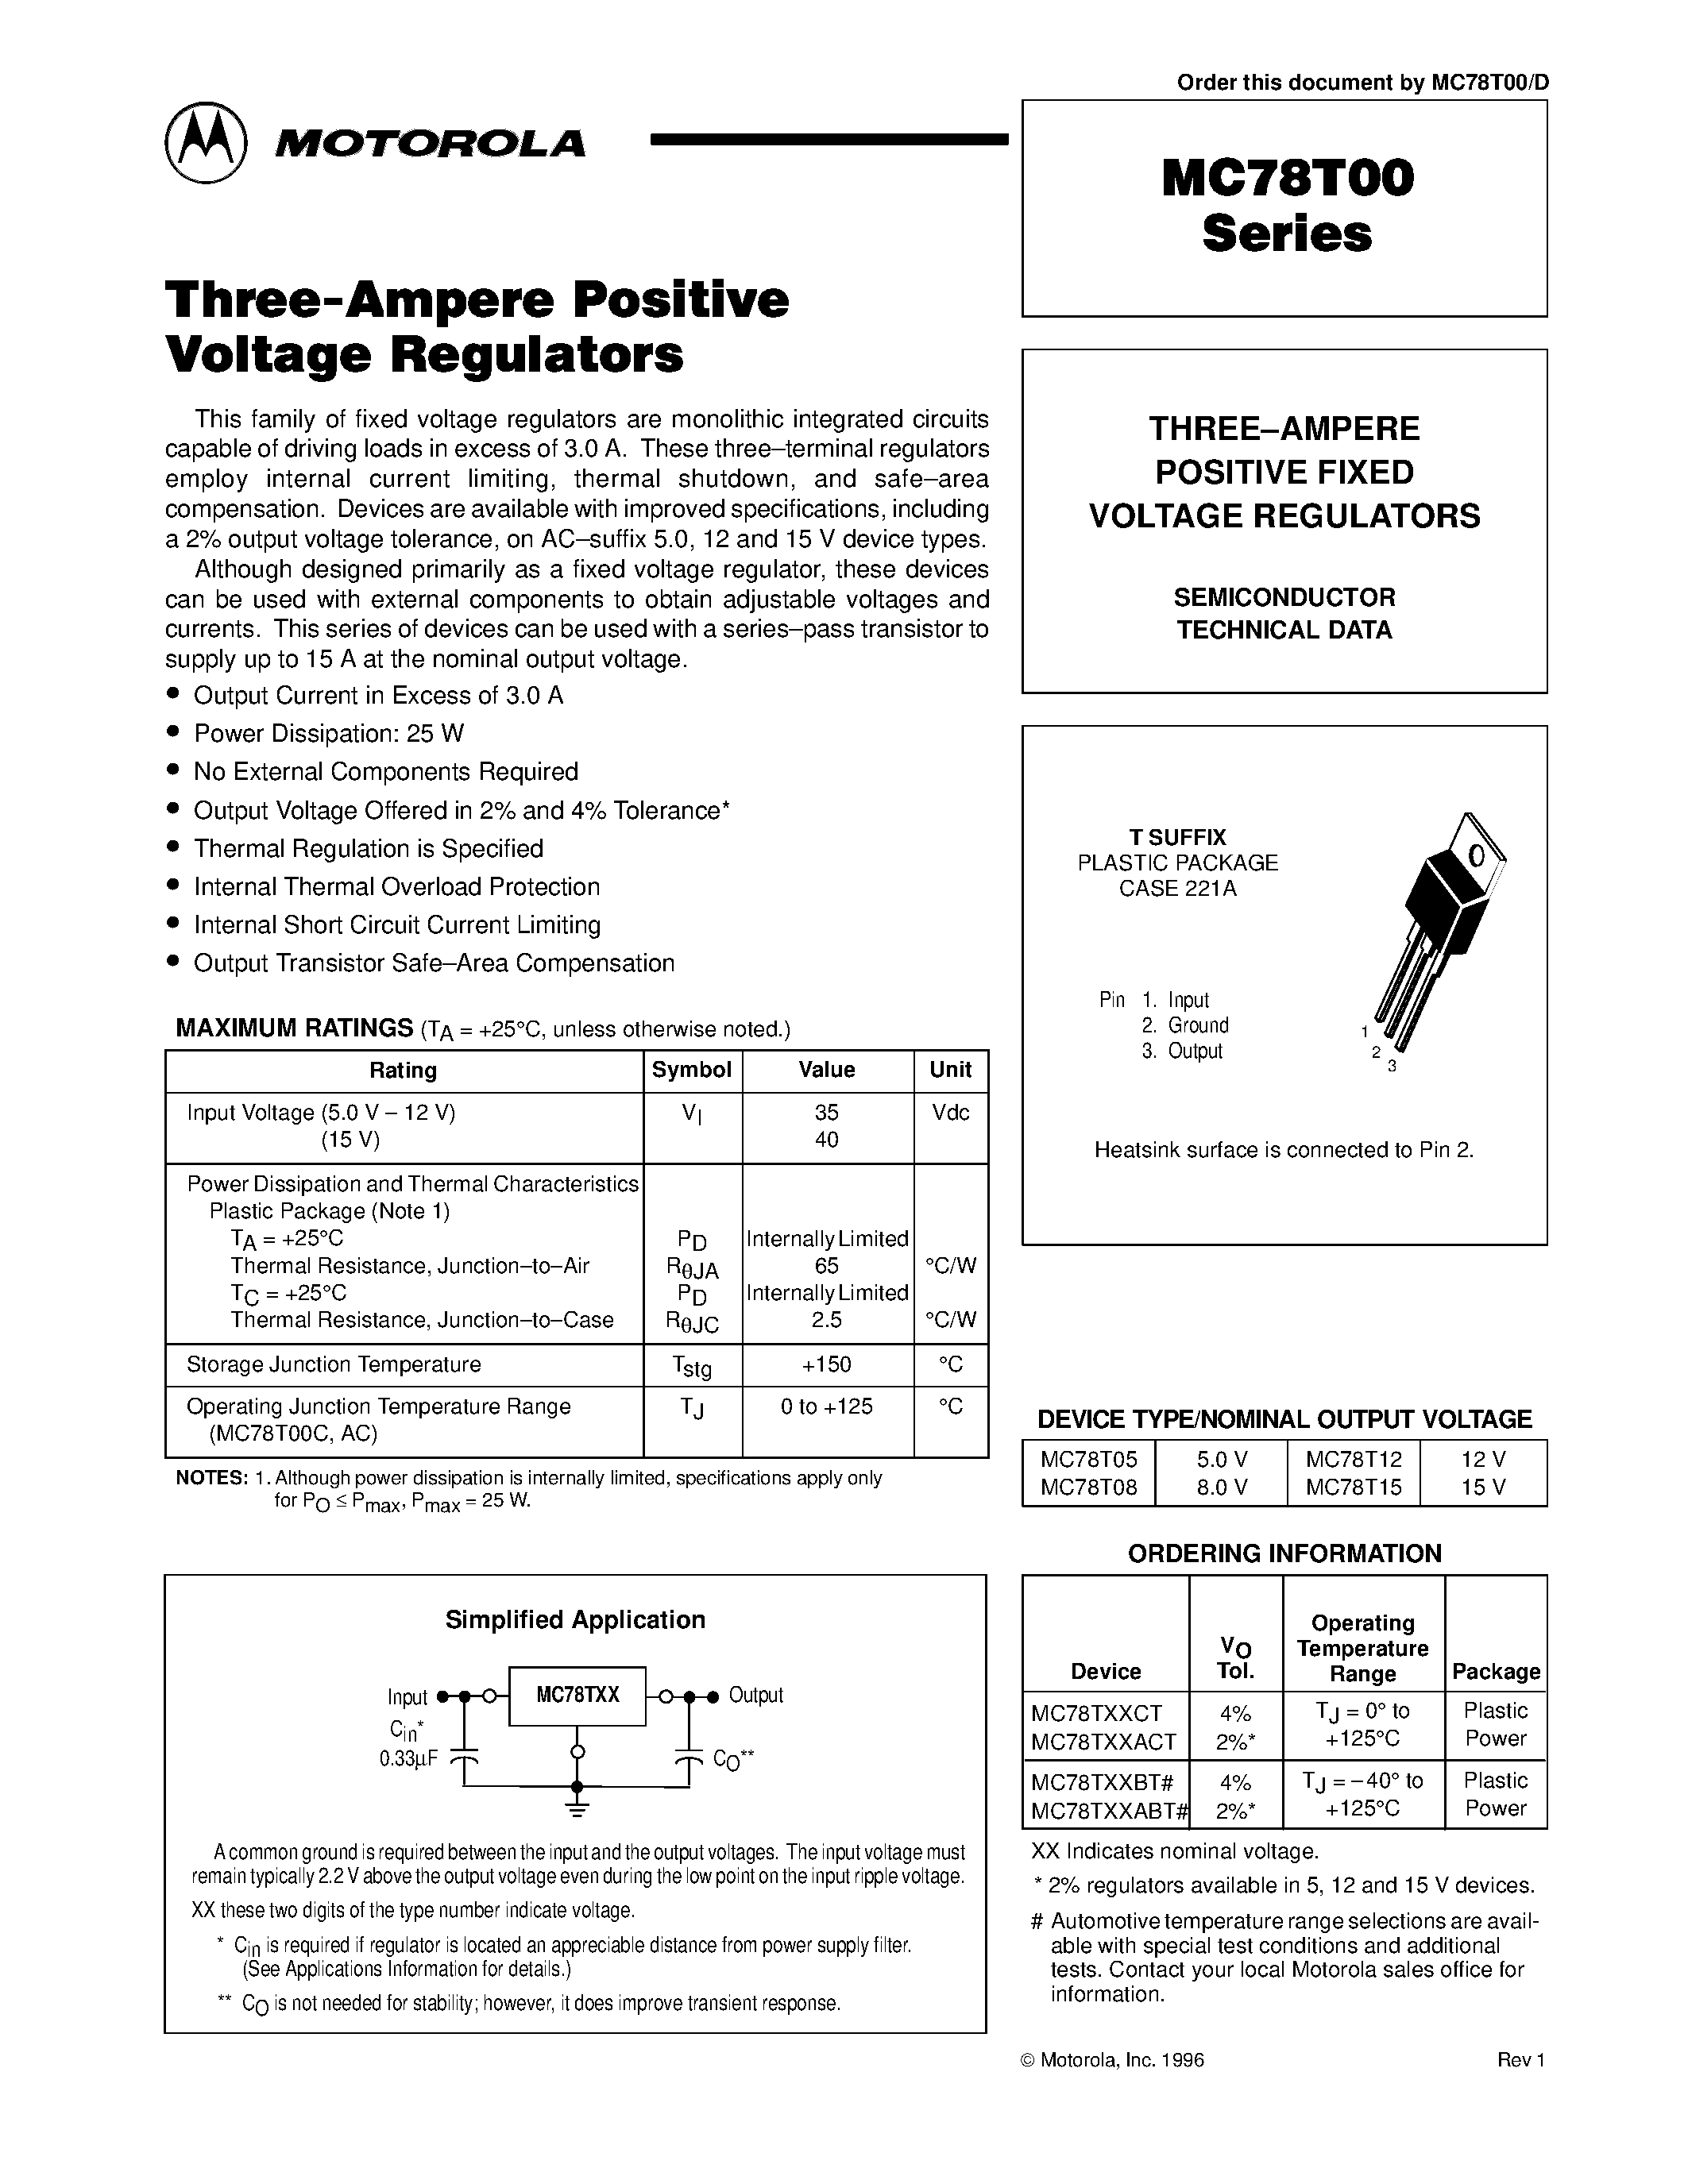 Datasheet MC78T12CT - THREE-AMPERE POSITIVE FIXED VOLTAGE REGULATORS page 1